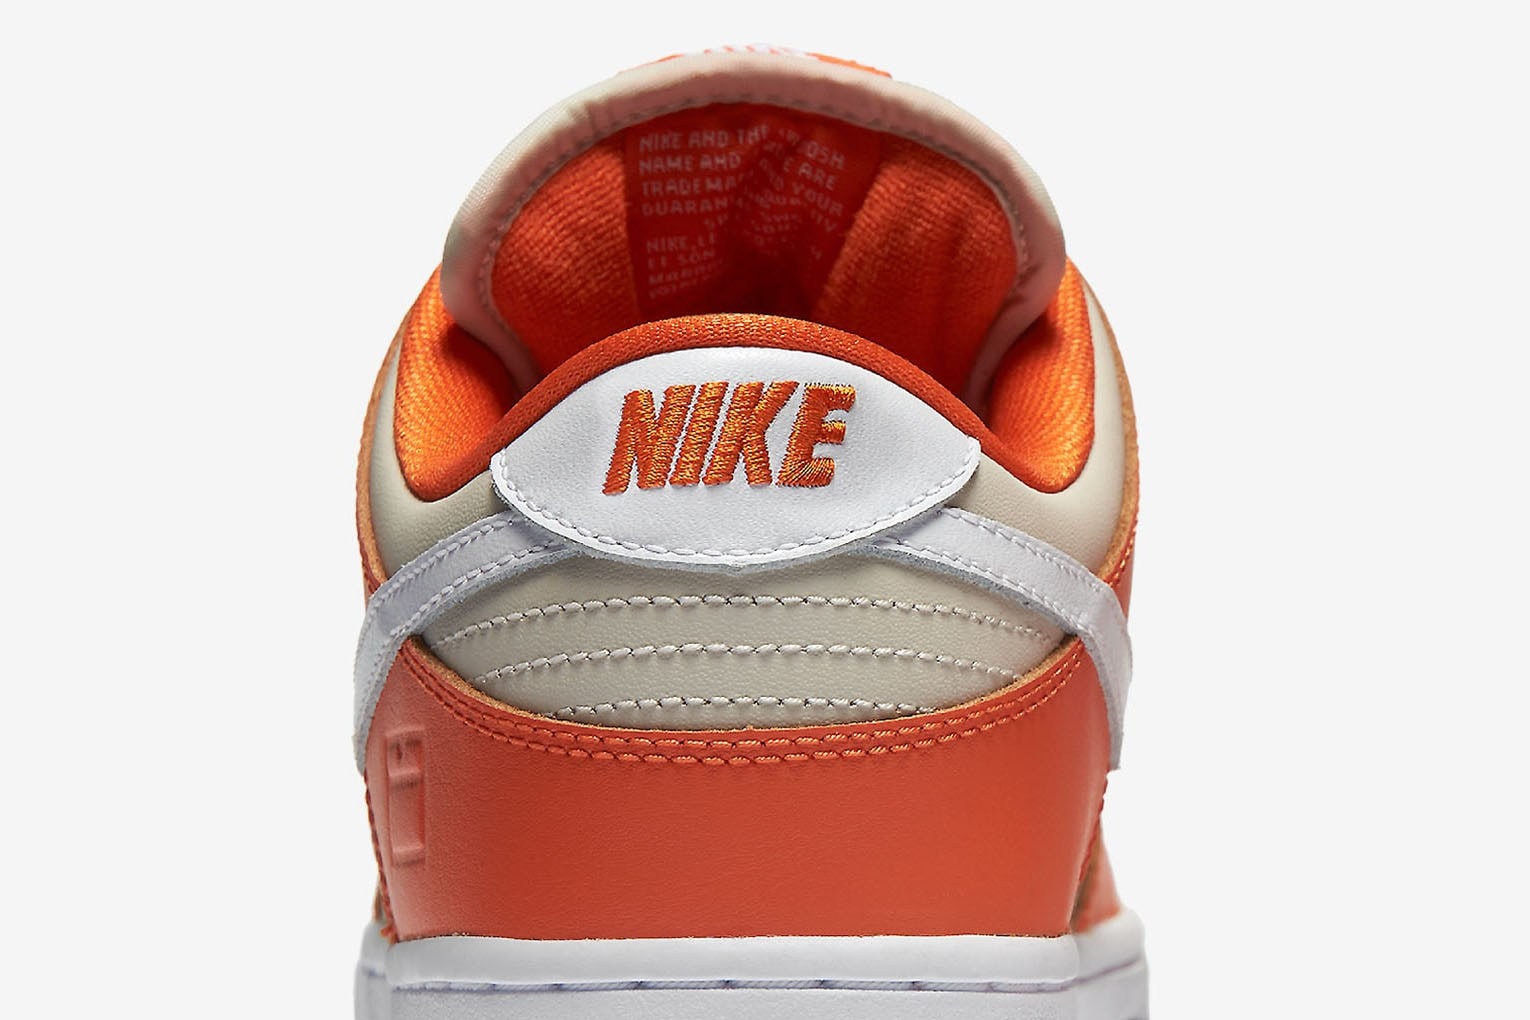 Nike SB Dunk Low Premium Orange Box Closer Look Old School Orange white colorway skateboarding white swoosh shoebox emboss